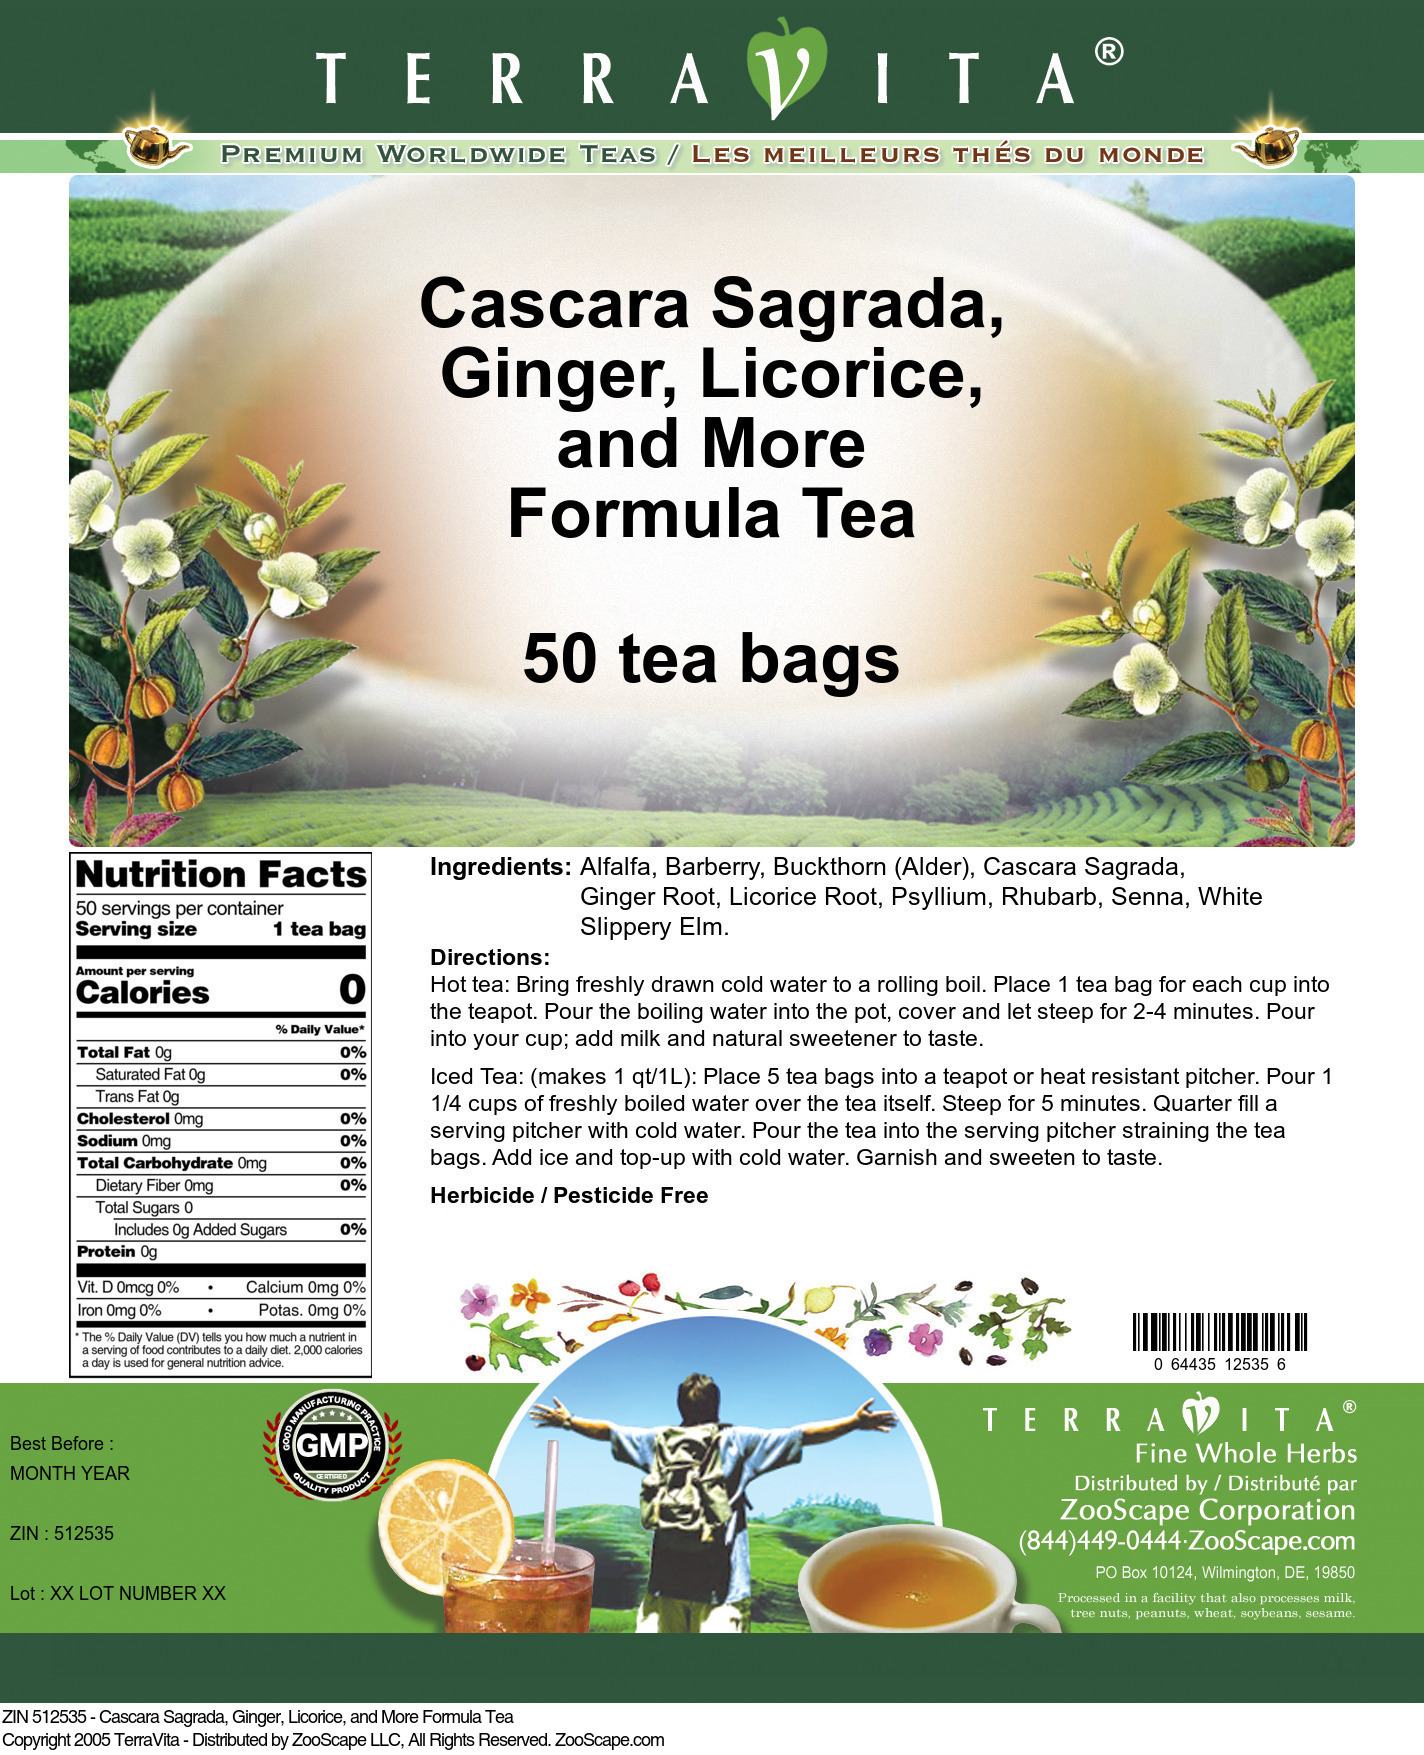 Cascara Sagrada, Ginger, Licorice, and More Formula Tea - Label